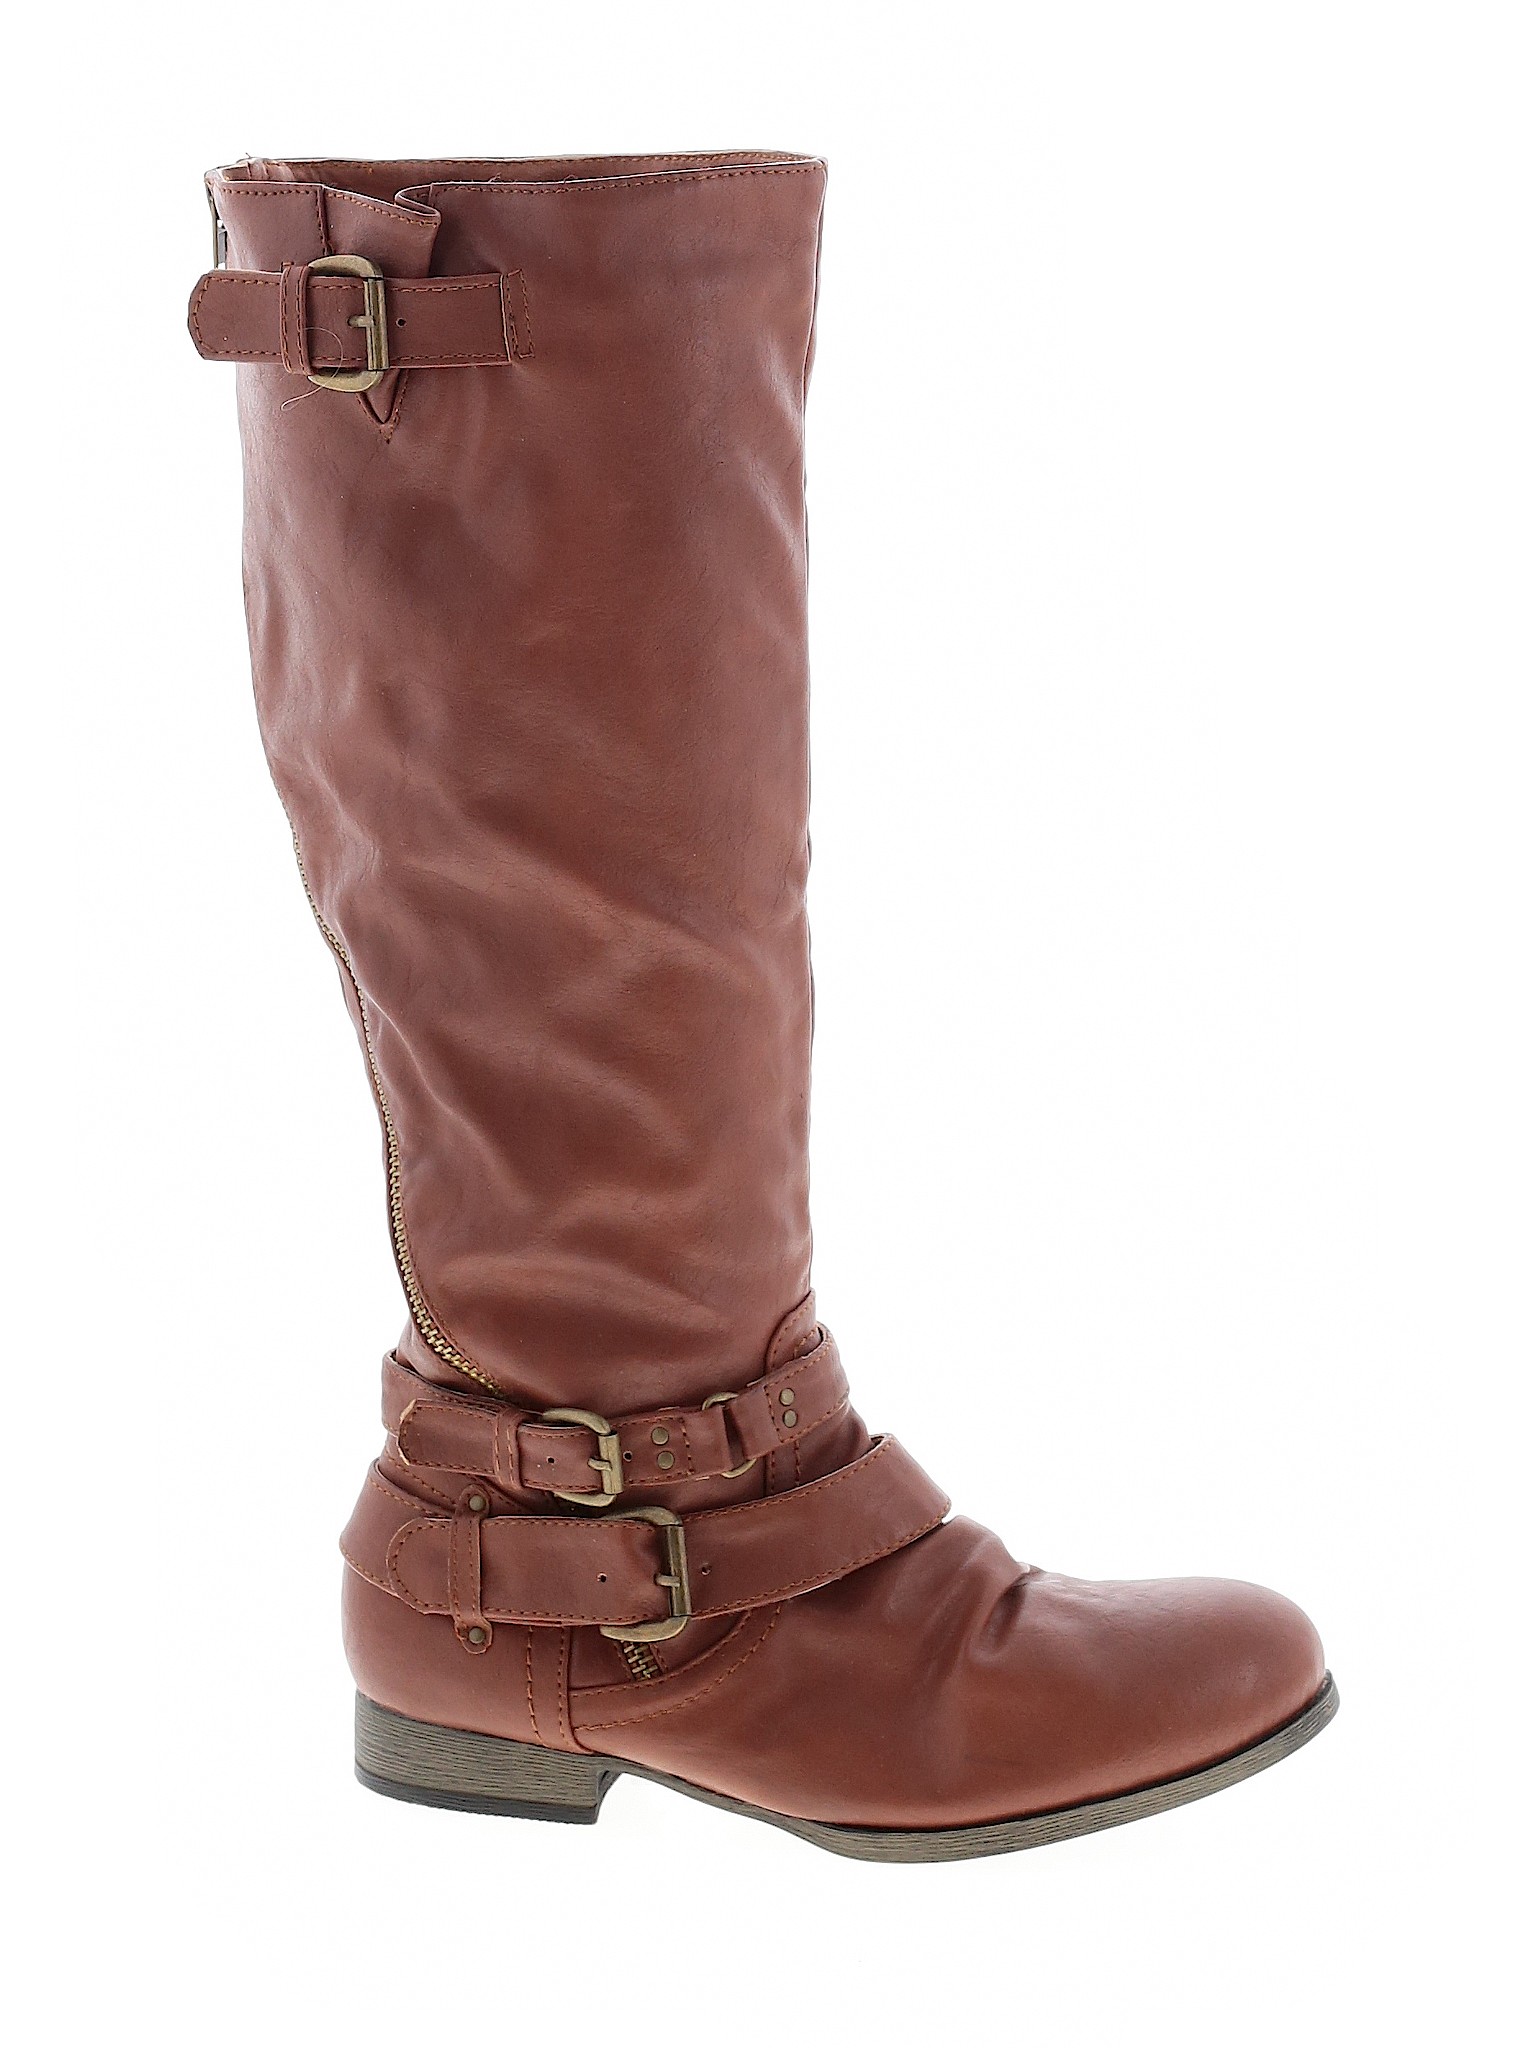 Wild Diva Women Brown Boots US 5.5 | eBay